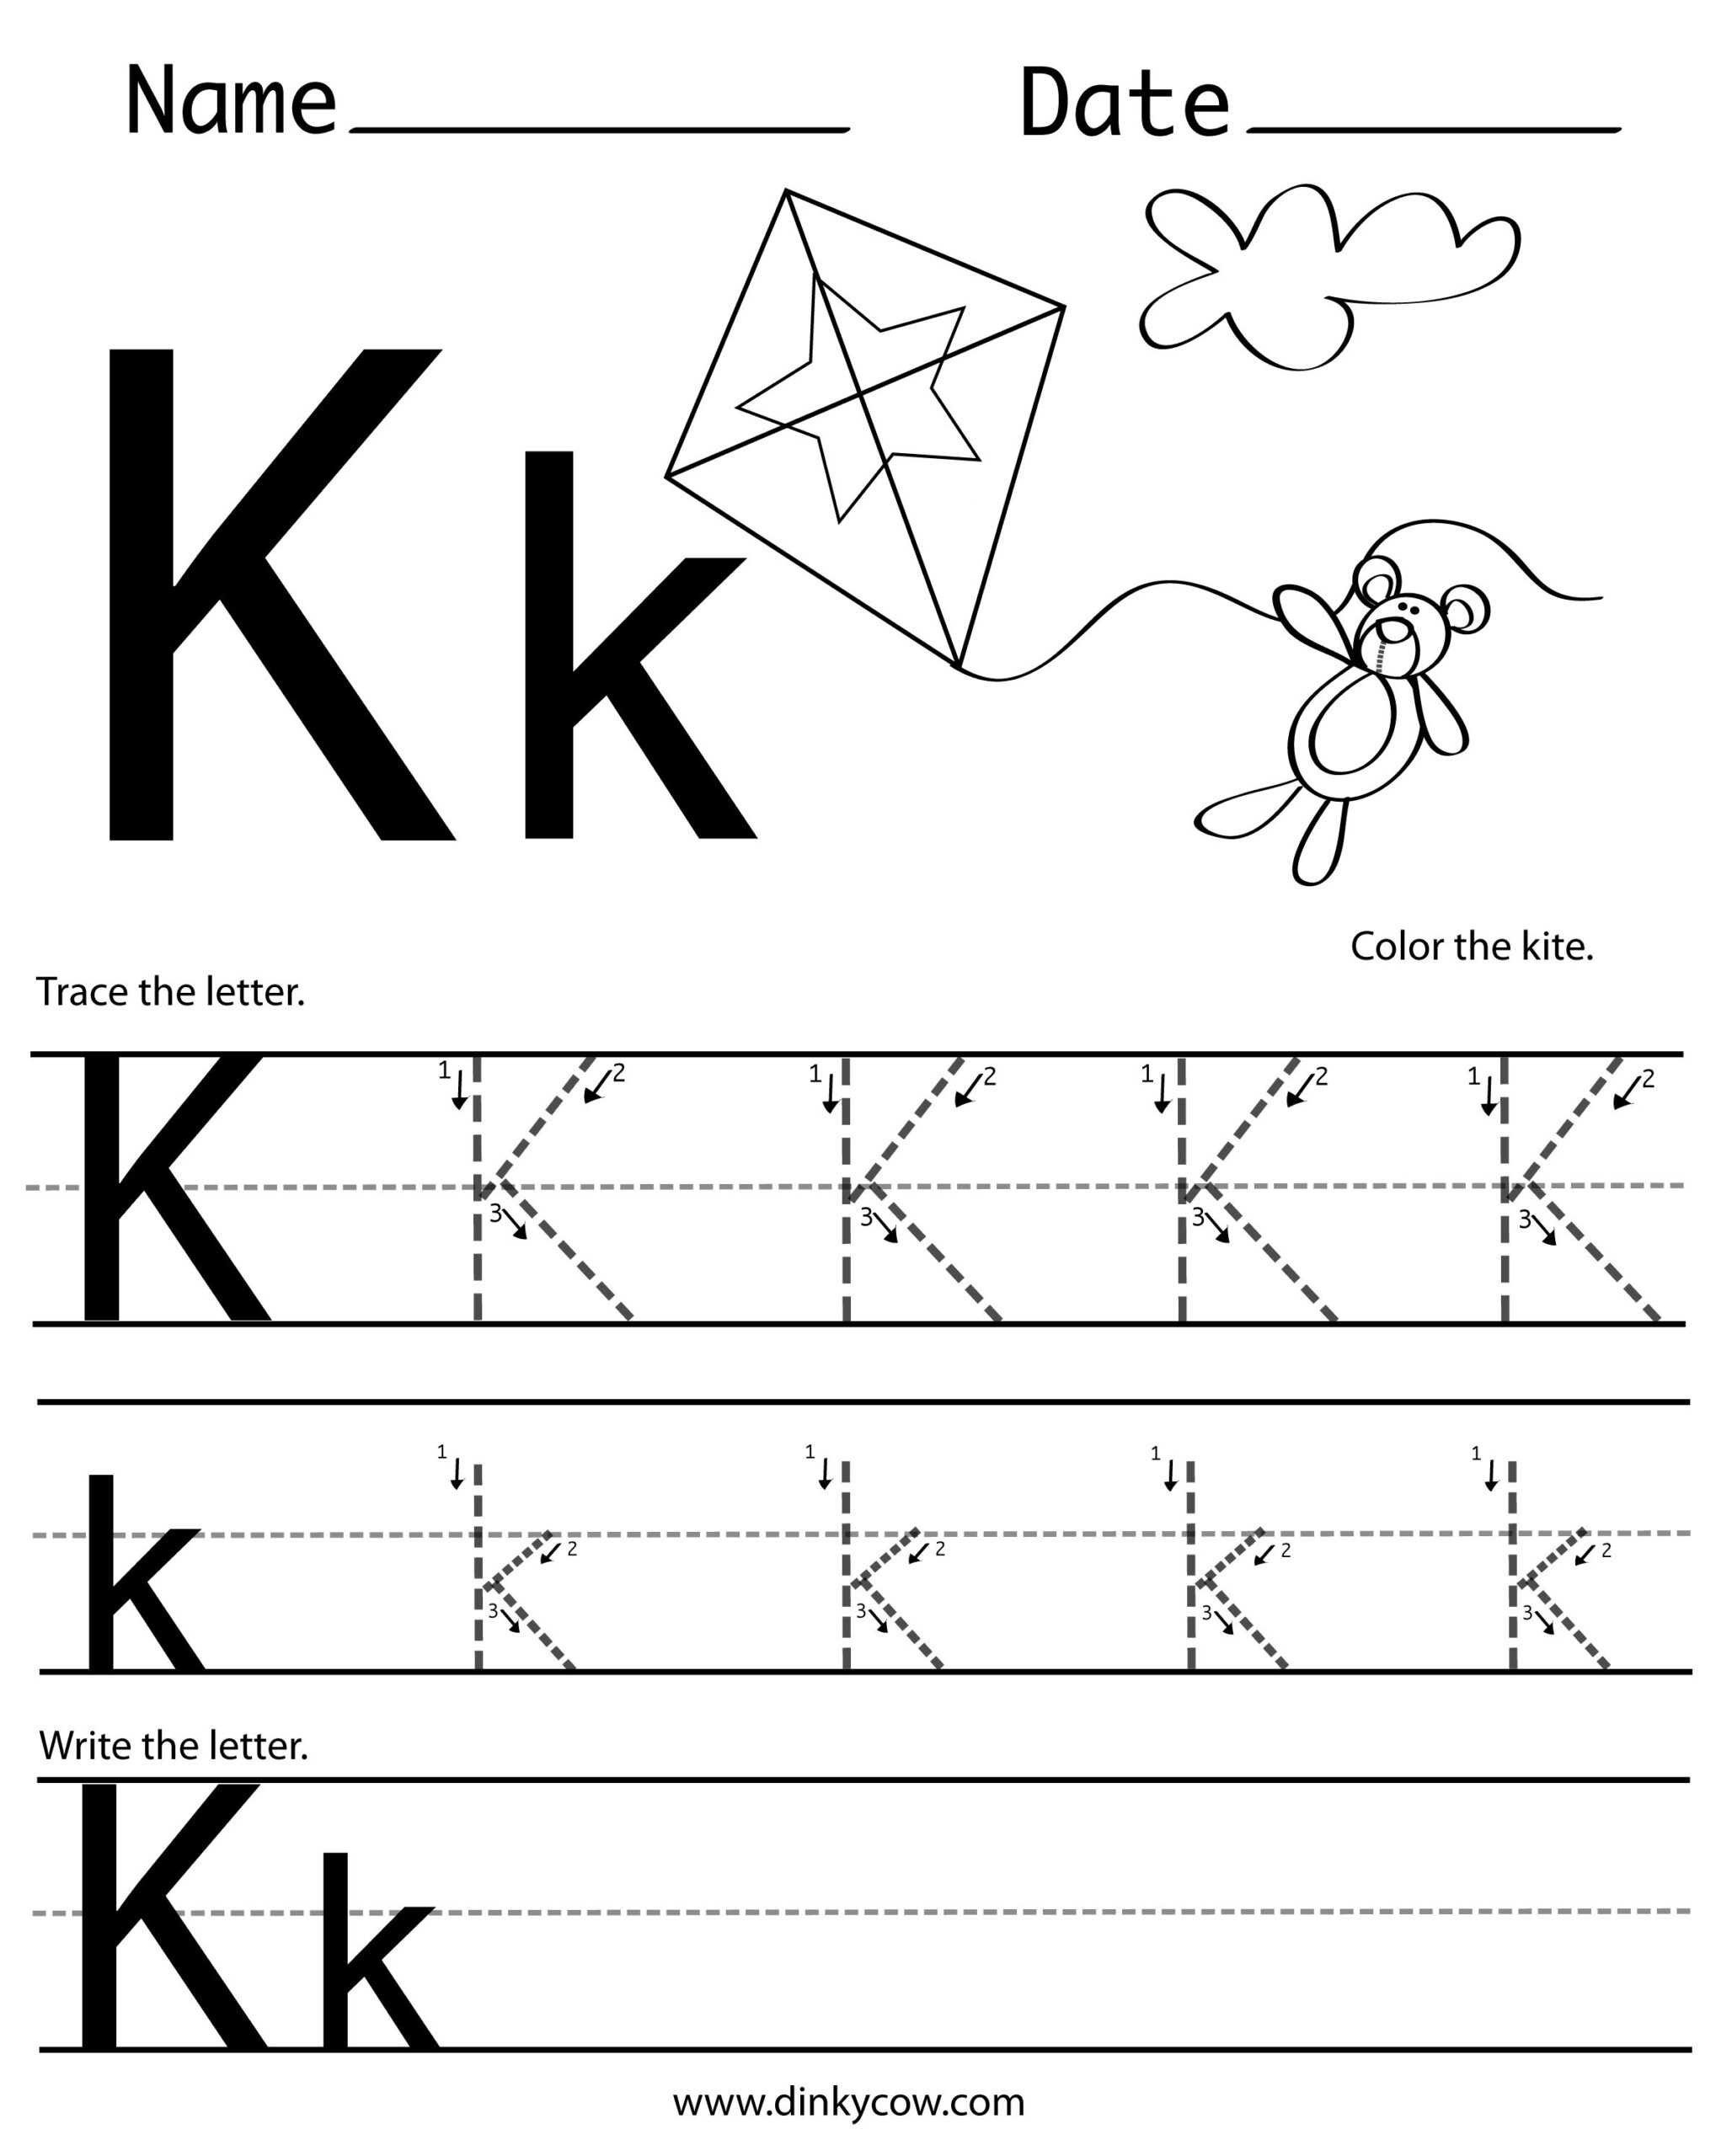 printable-letter-k-tracing-worksheets-for-kindergarten-alphabet-letter-k-tracing-worksheet